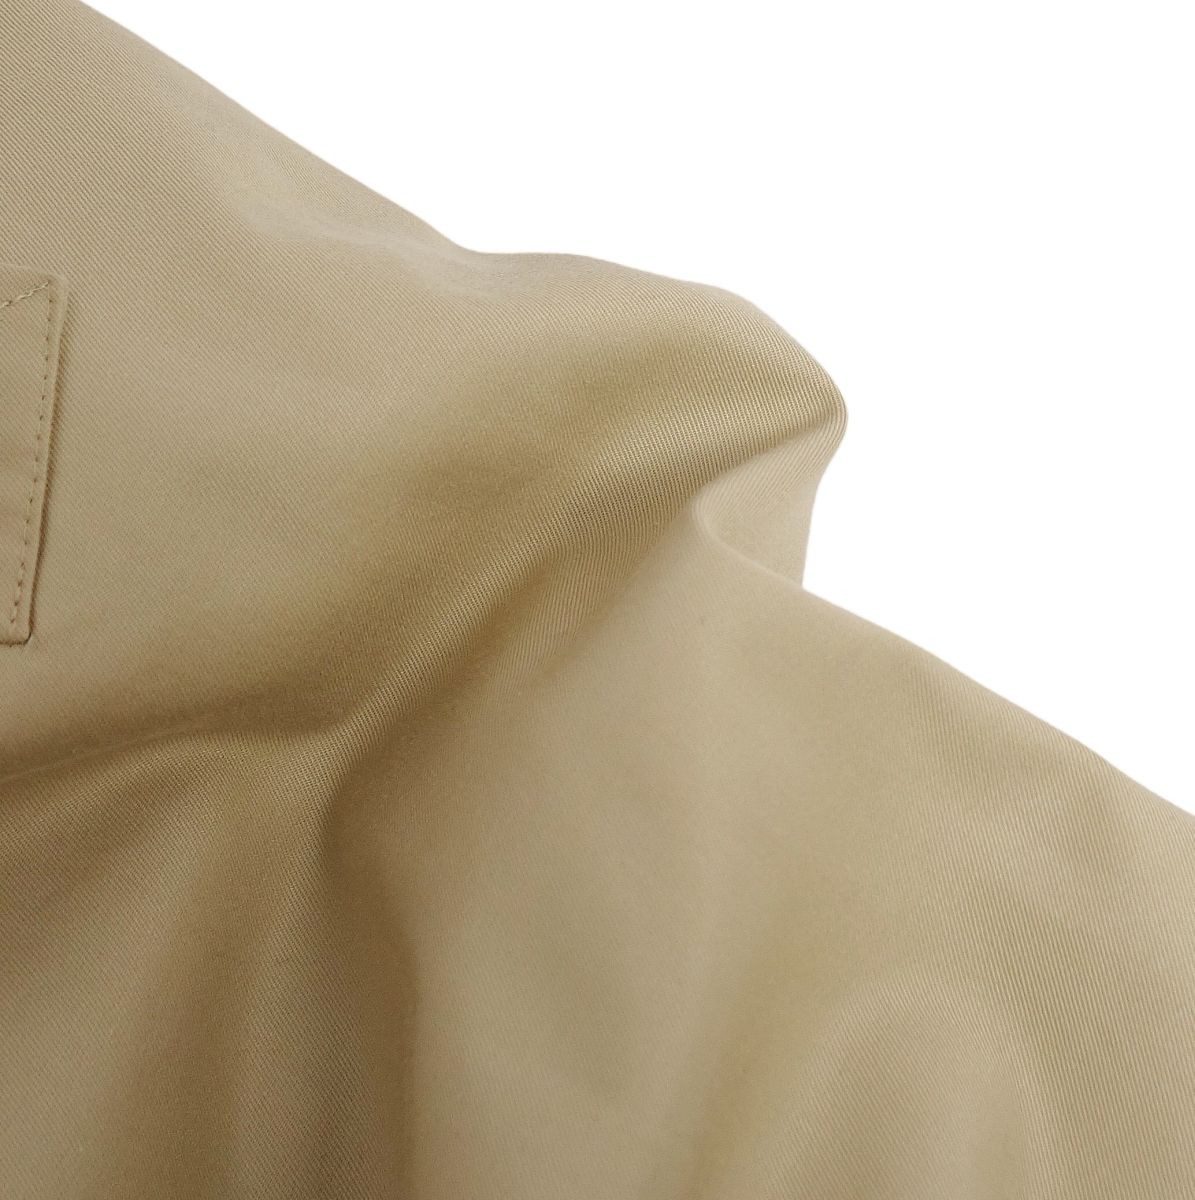 Vint Burberry s Coat Stainless Colour Coat Balmacorn Coat r Coat Back Check Liner   7AR (S equivalent) Beige - BIG